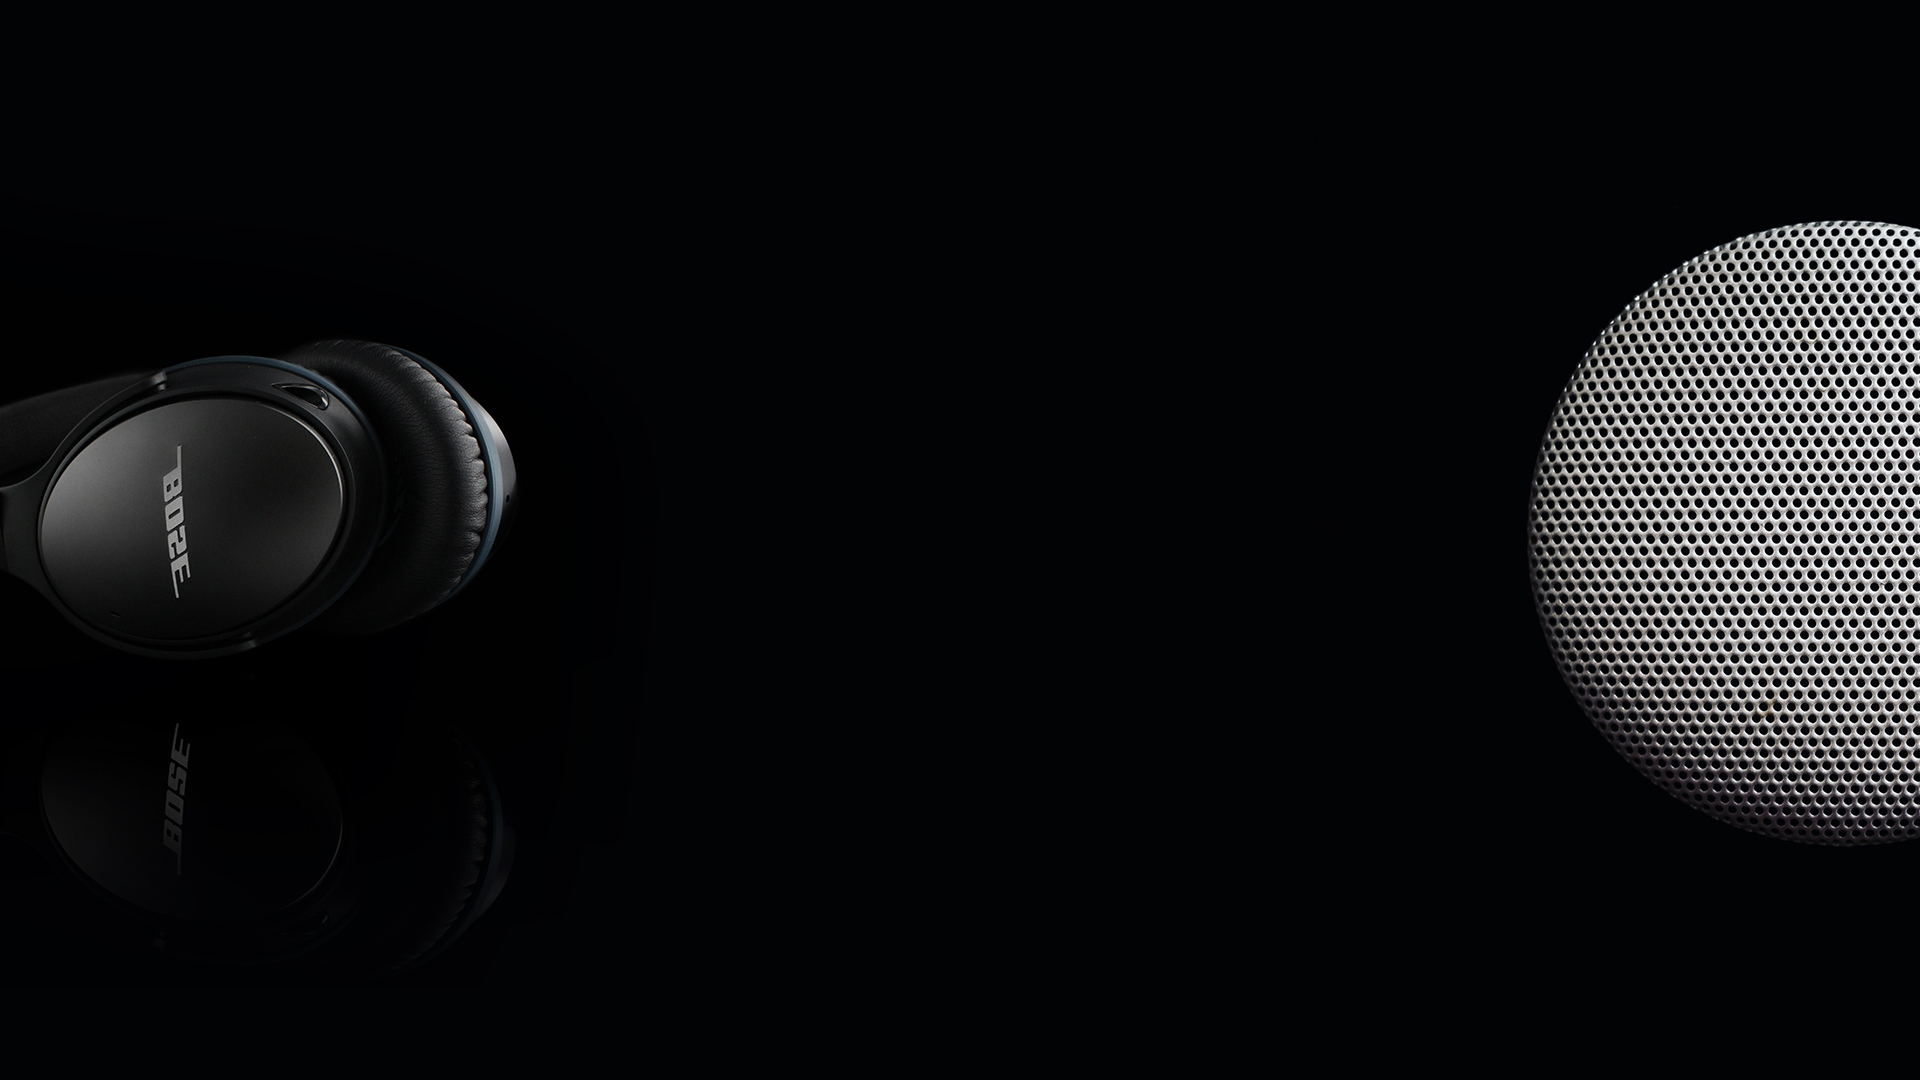 Bose headphones and speaker on black background.